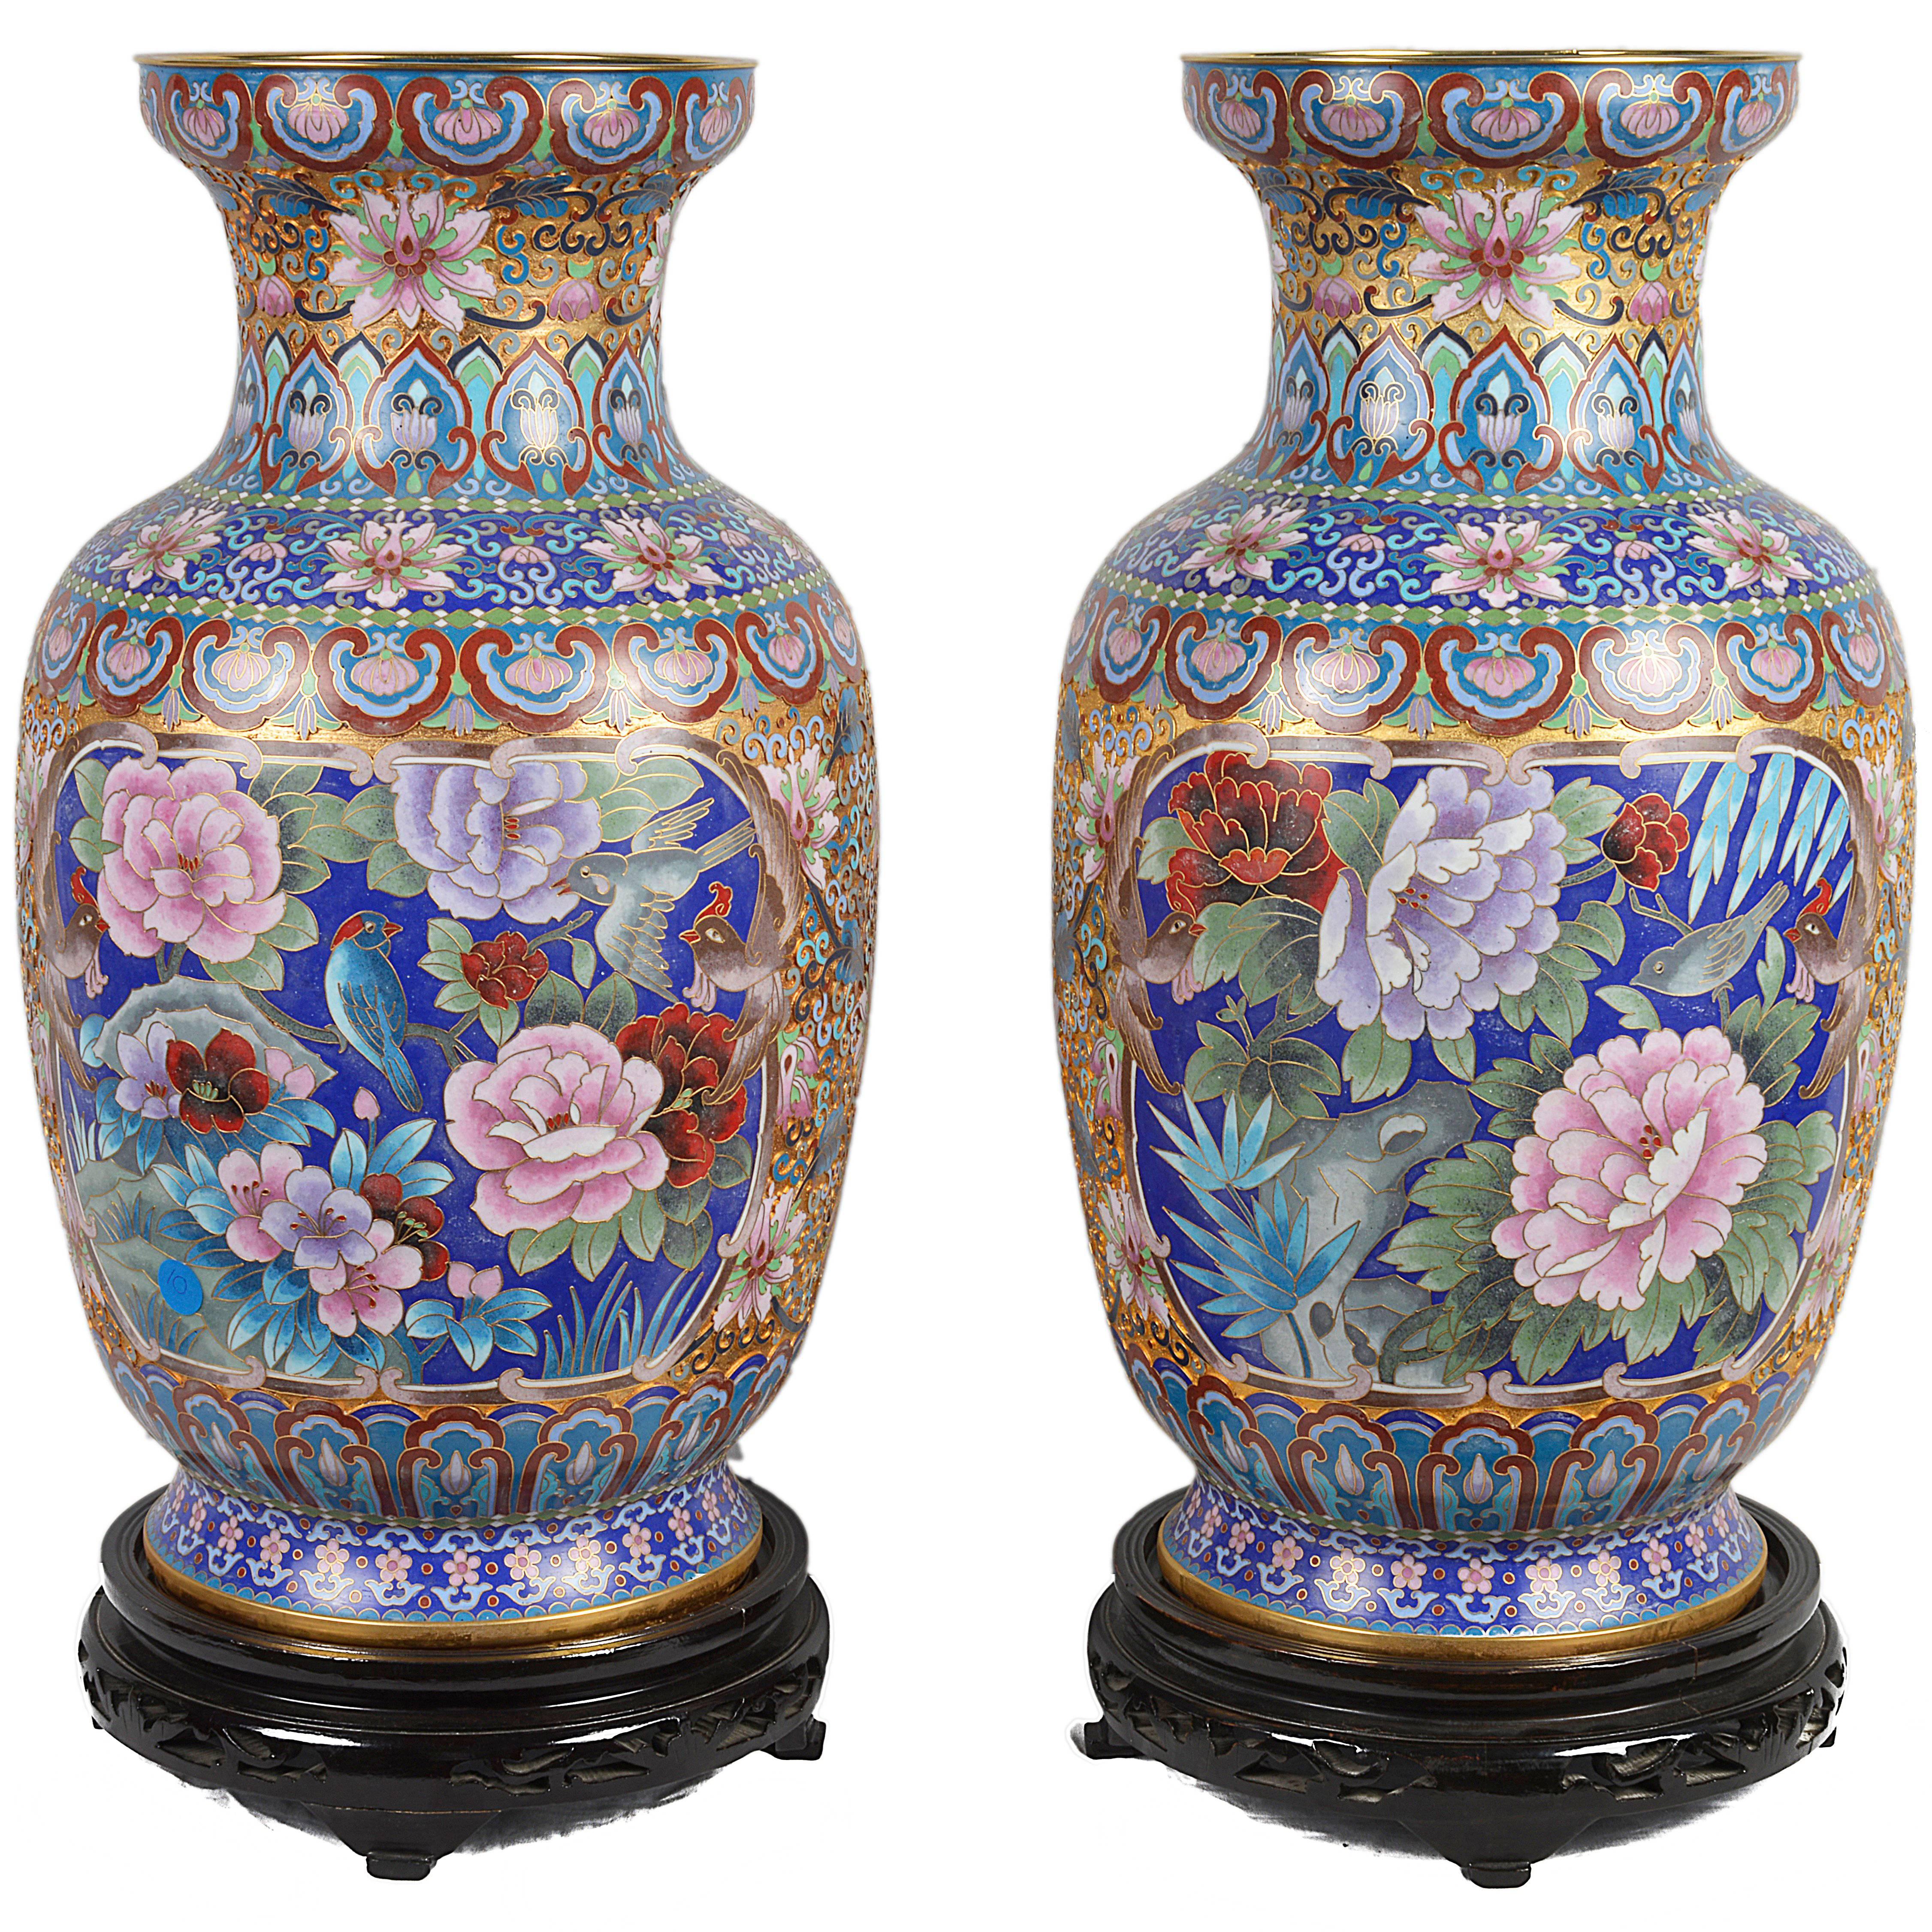 Pair of Chinese Decorative Cloisonné Enamel Vases